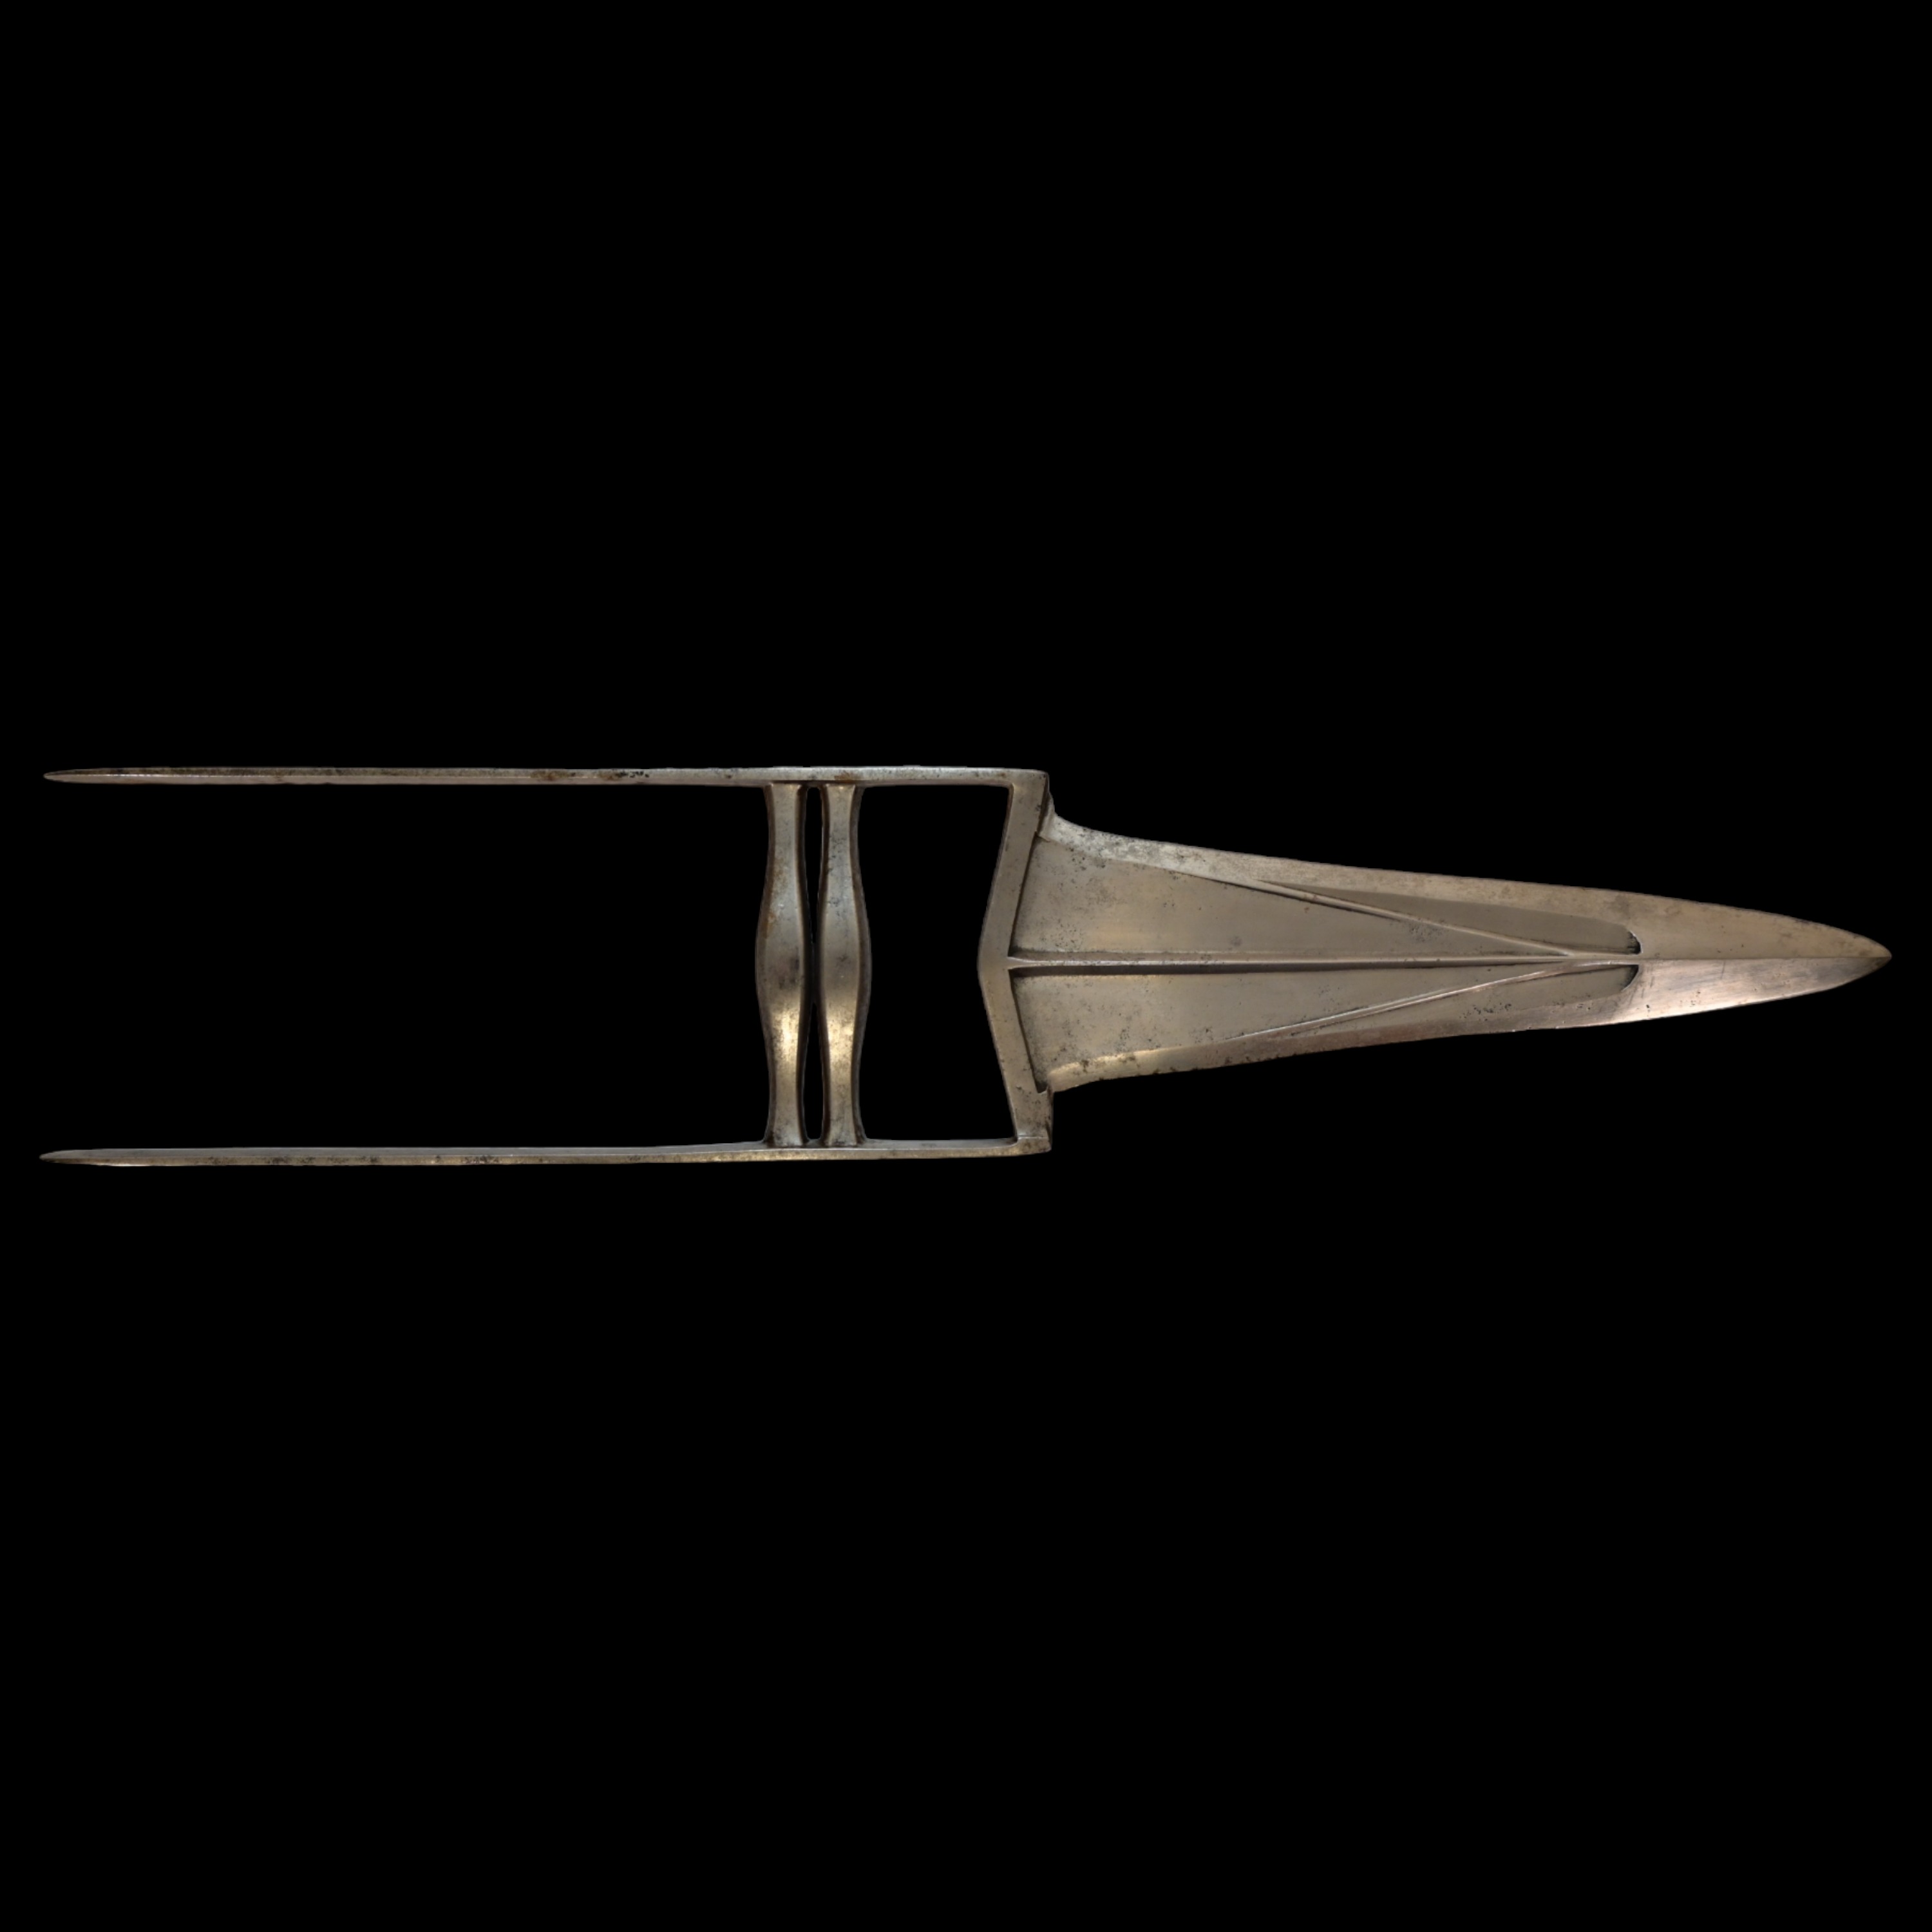 Authentic Indian Katar dagger, 19 century - Image 7 of 9